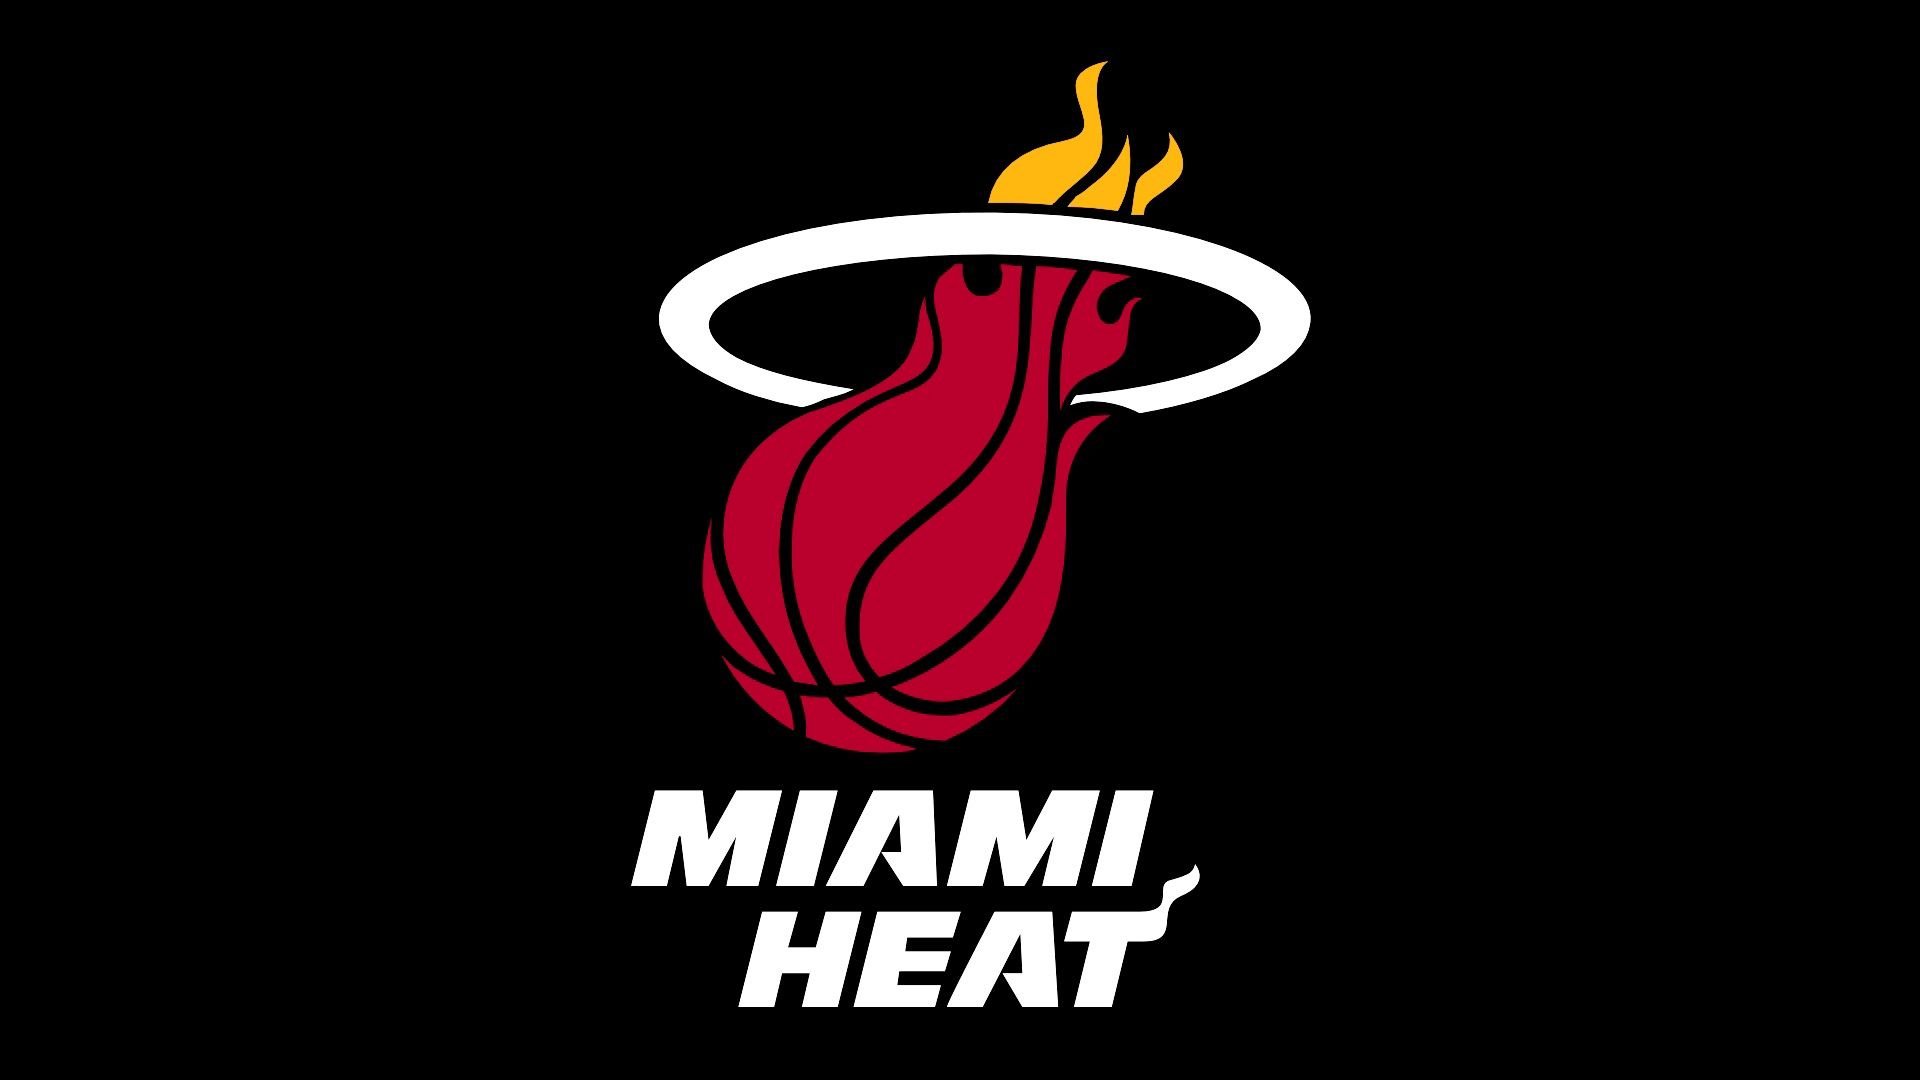 Miami Heat Logo Wallpaper Basketball Team NBA to Days Basketball